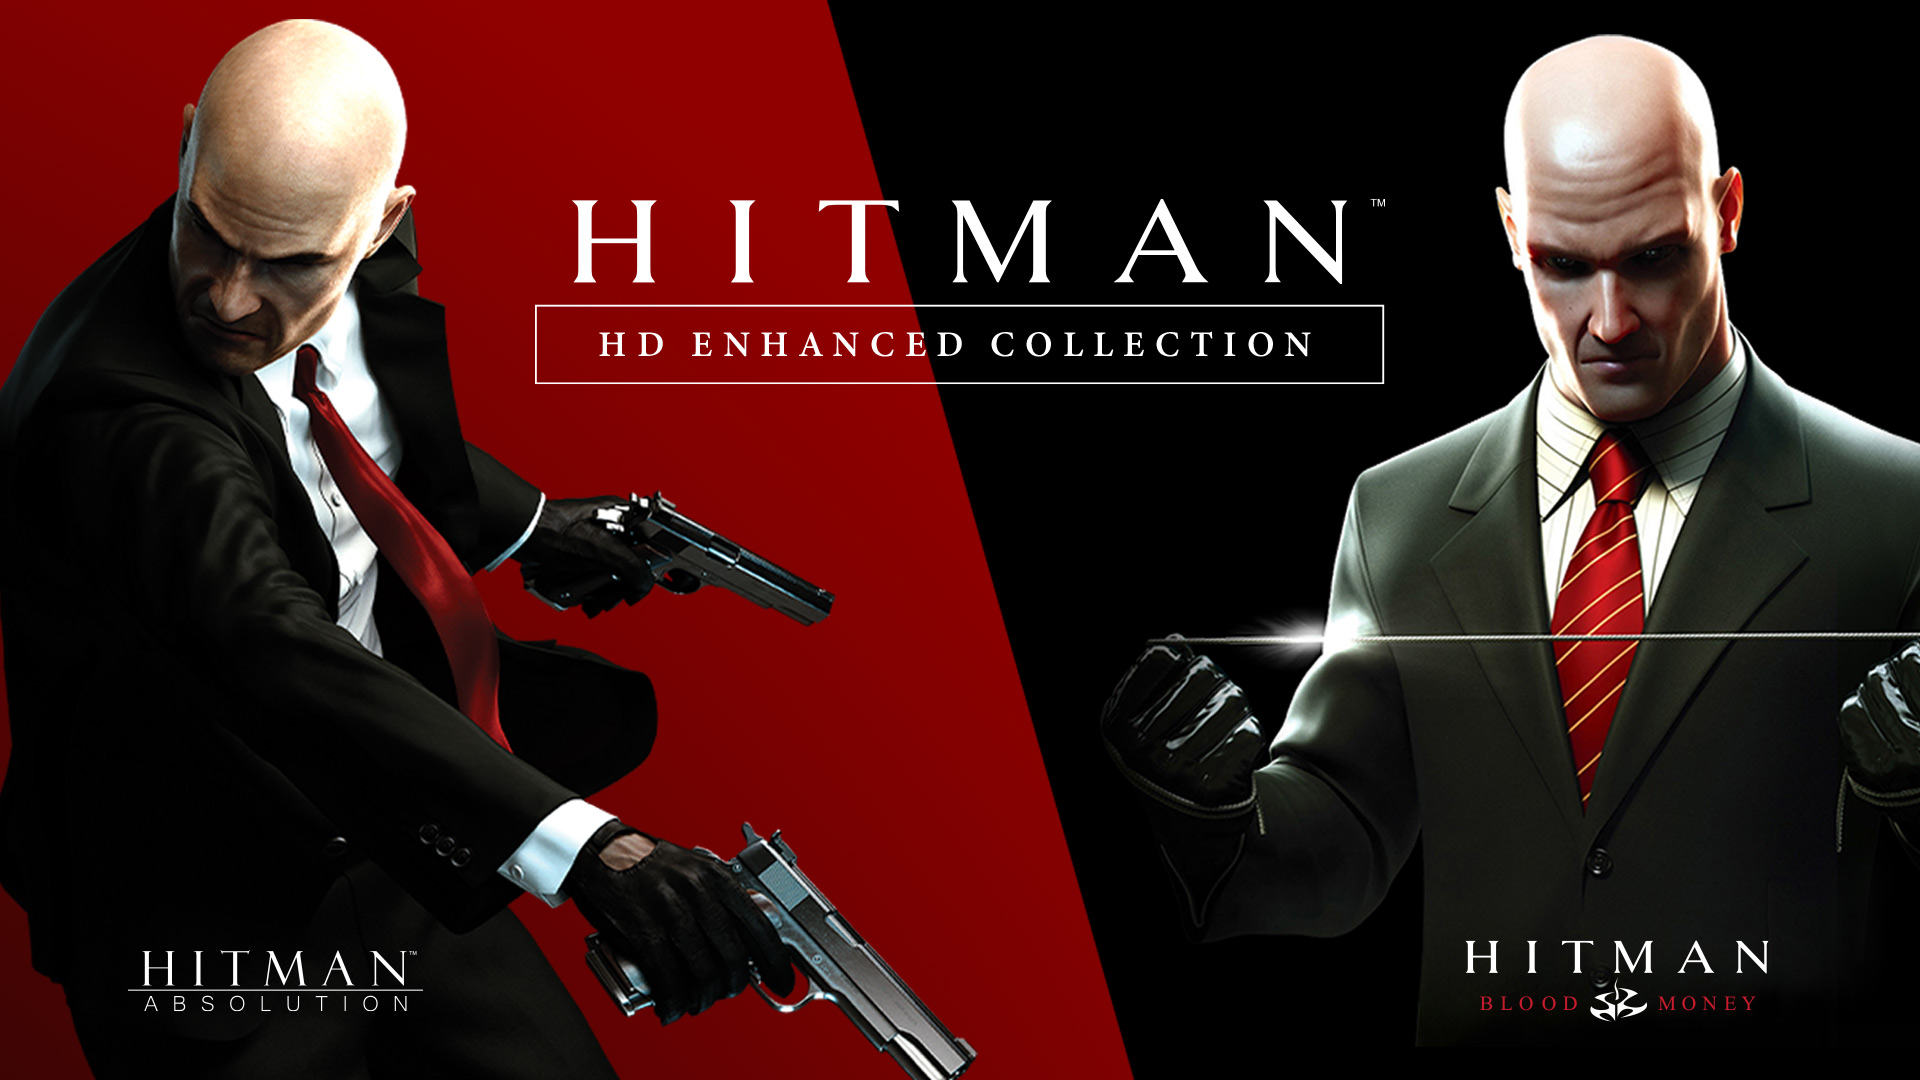 Hitman: Krvavi novac i Hitman: Absolution 4K Remasters potvrđeni za konzole